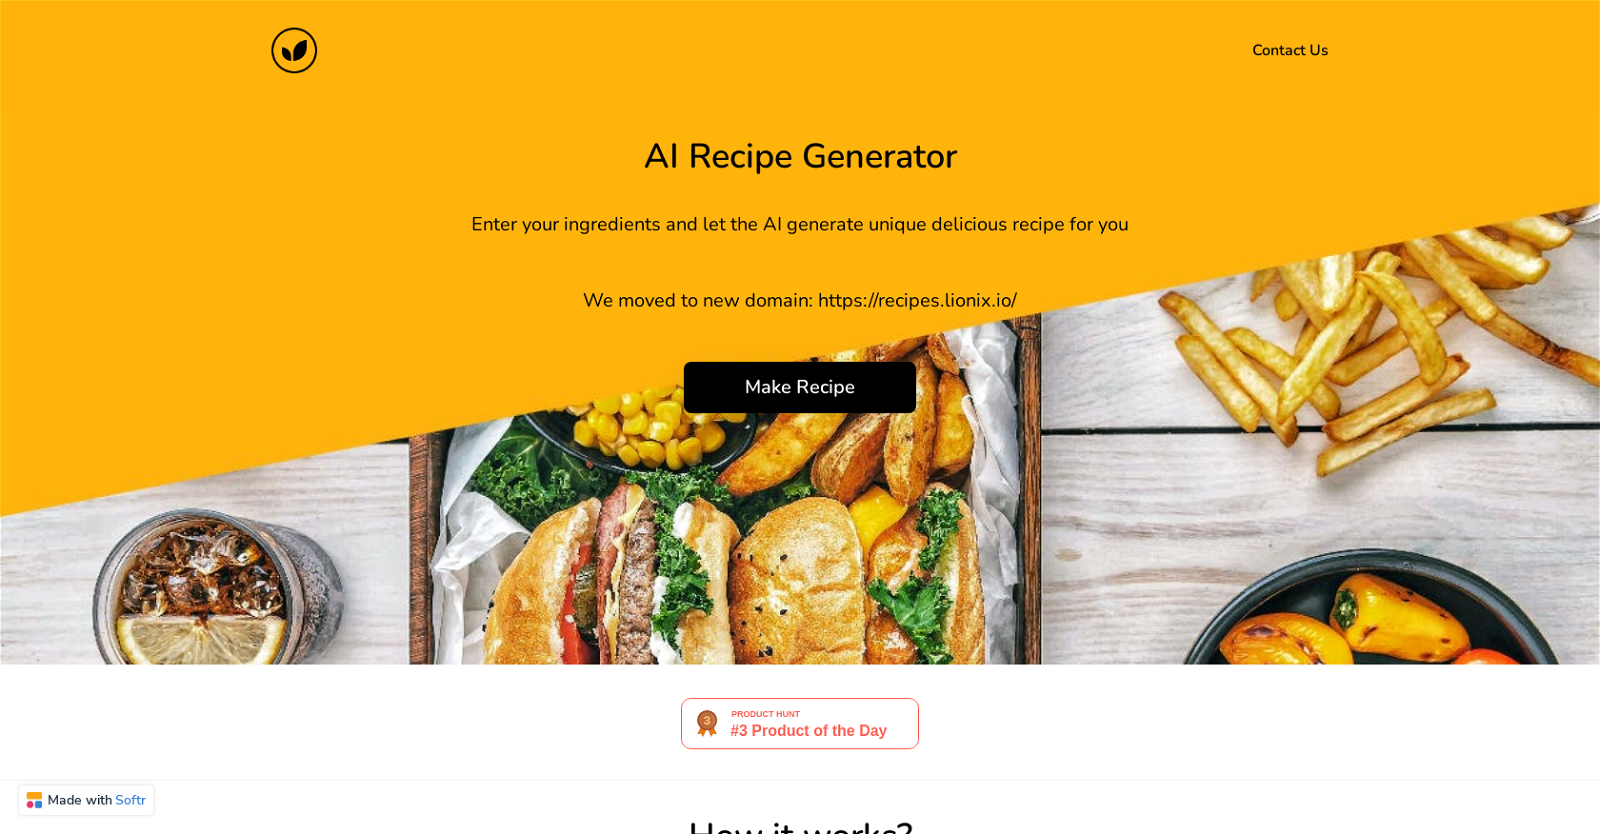 AI Recipe Generator image